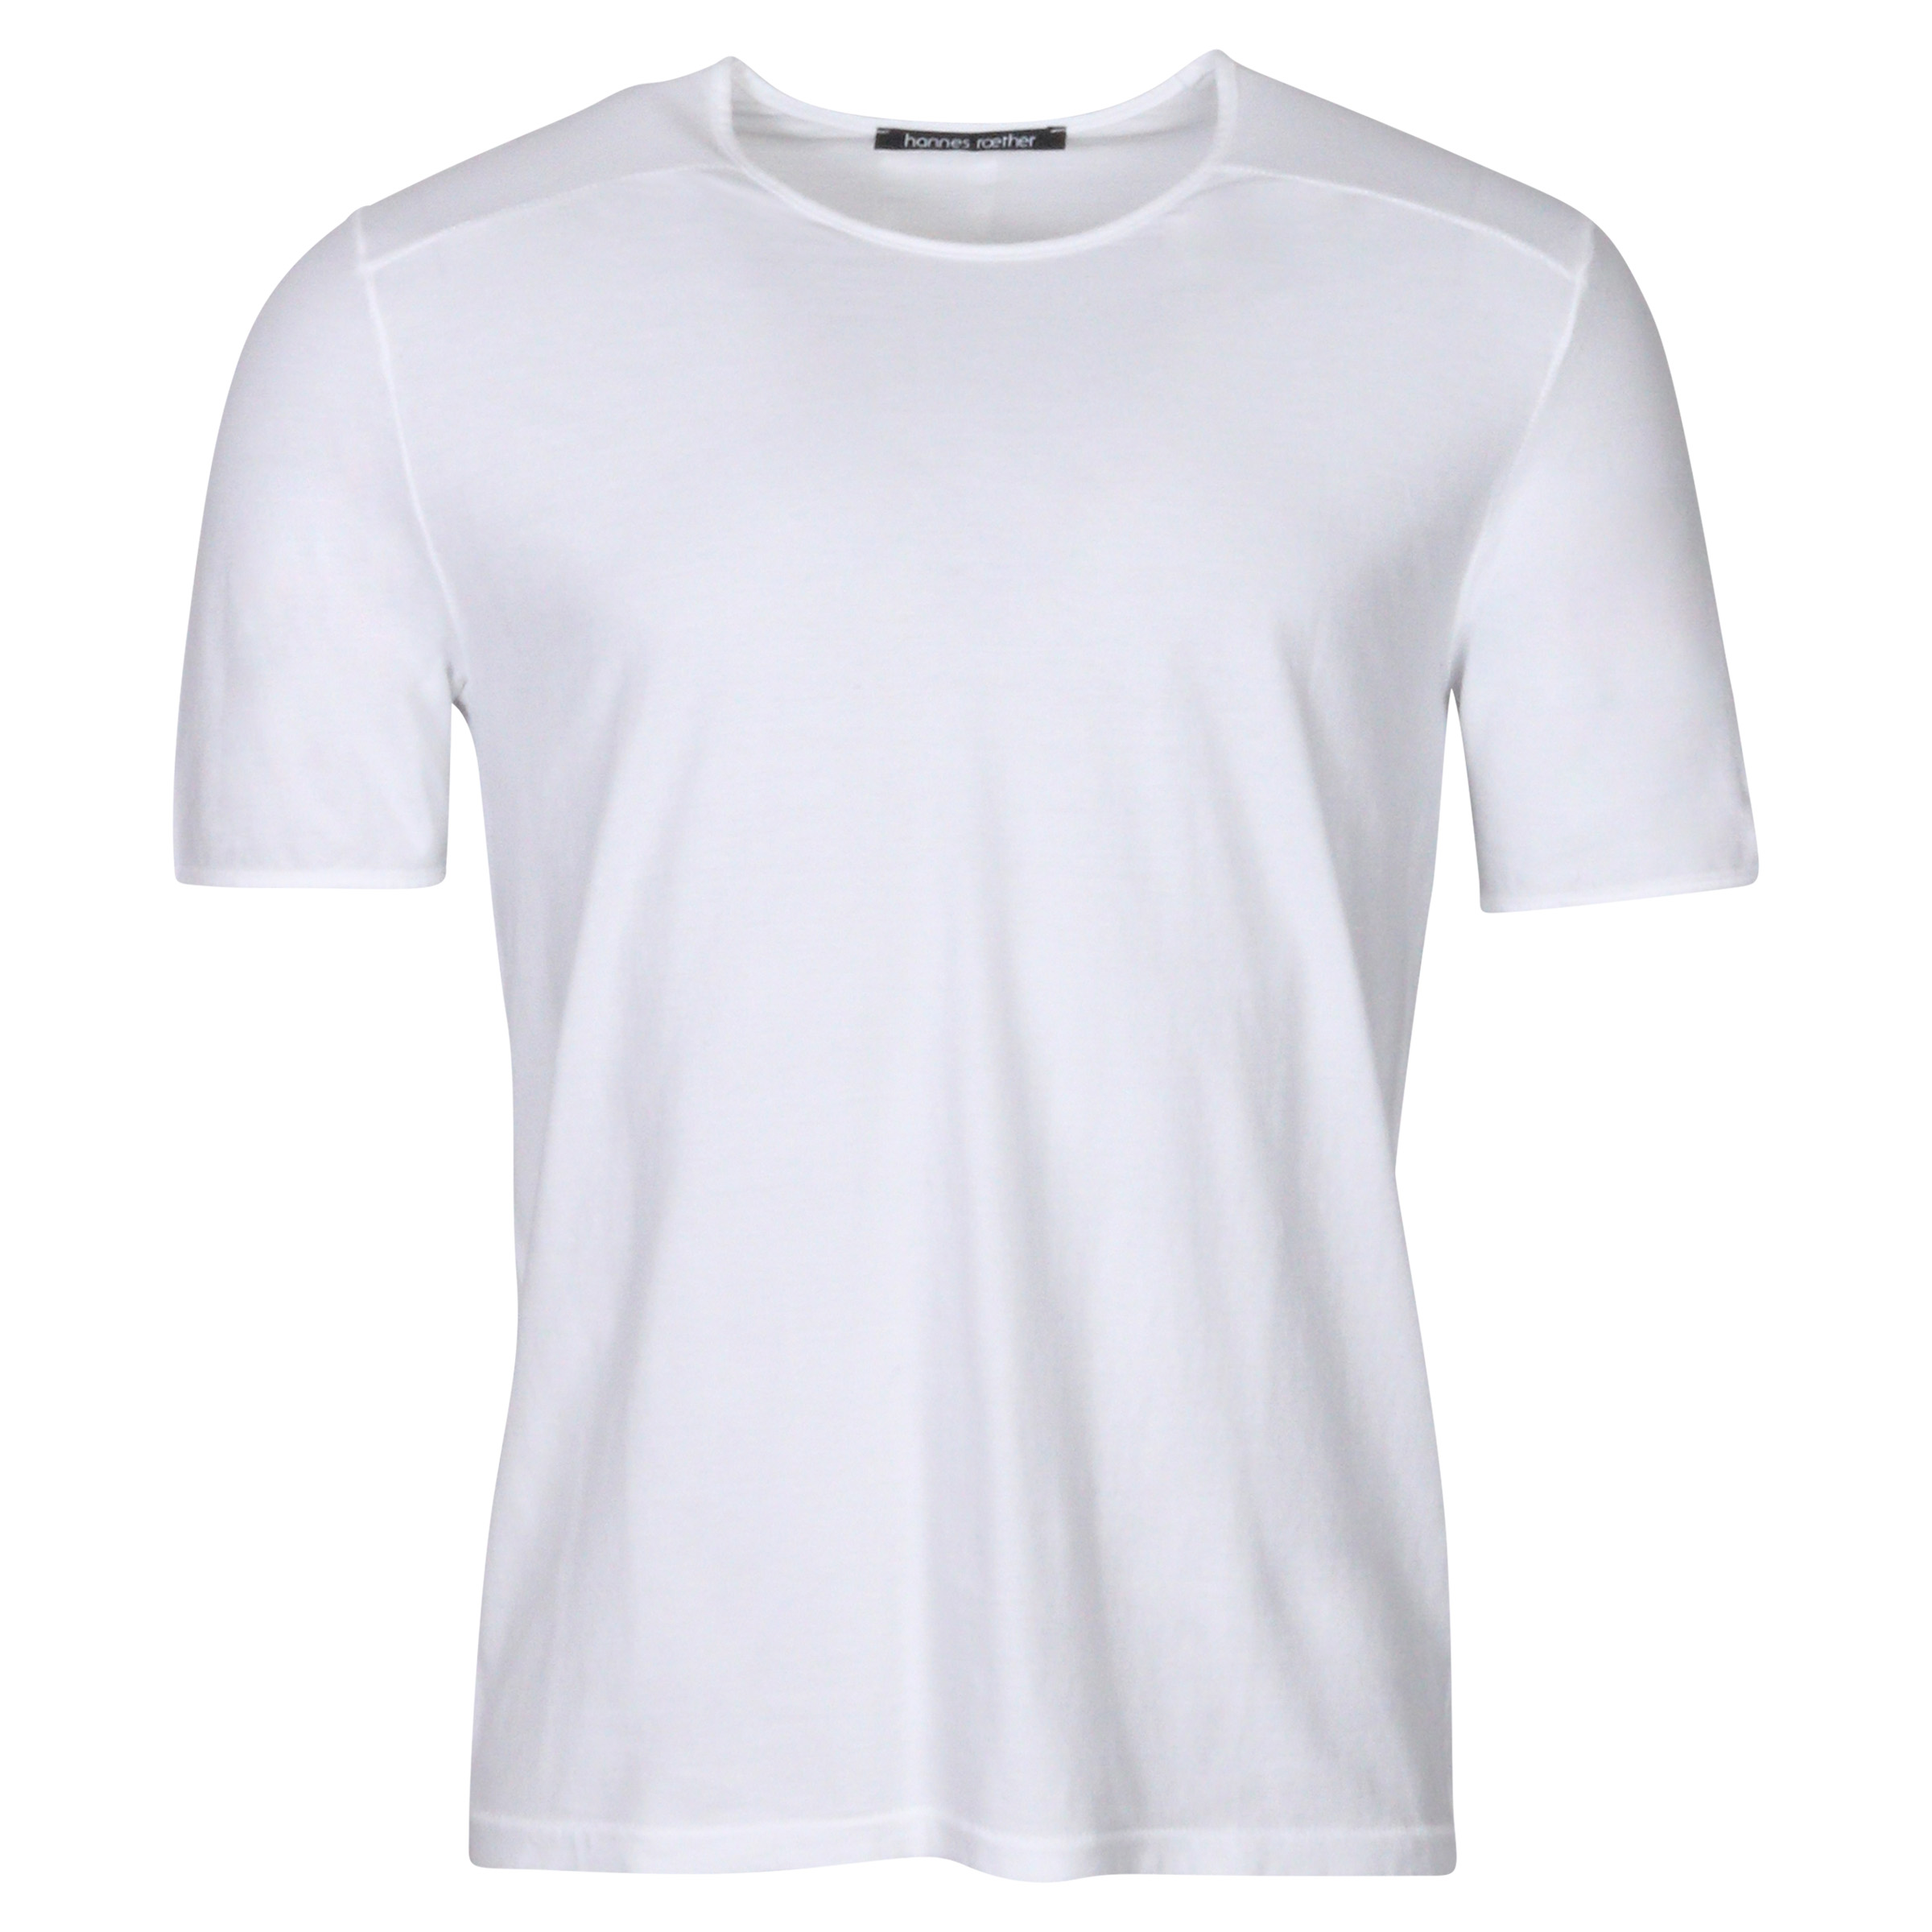 Hannes Roether T-Shirt White XXXL